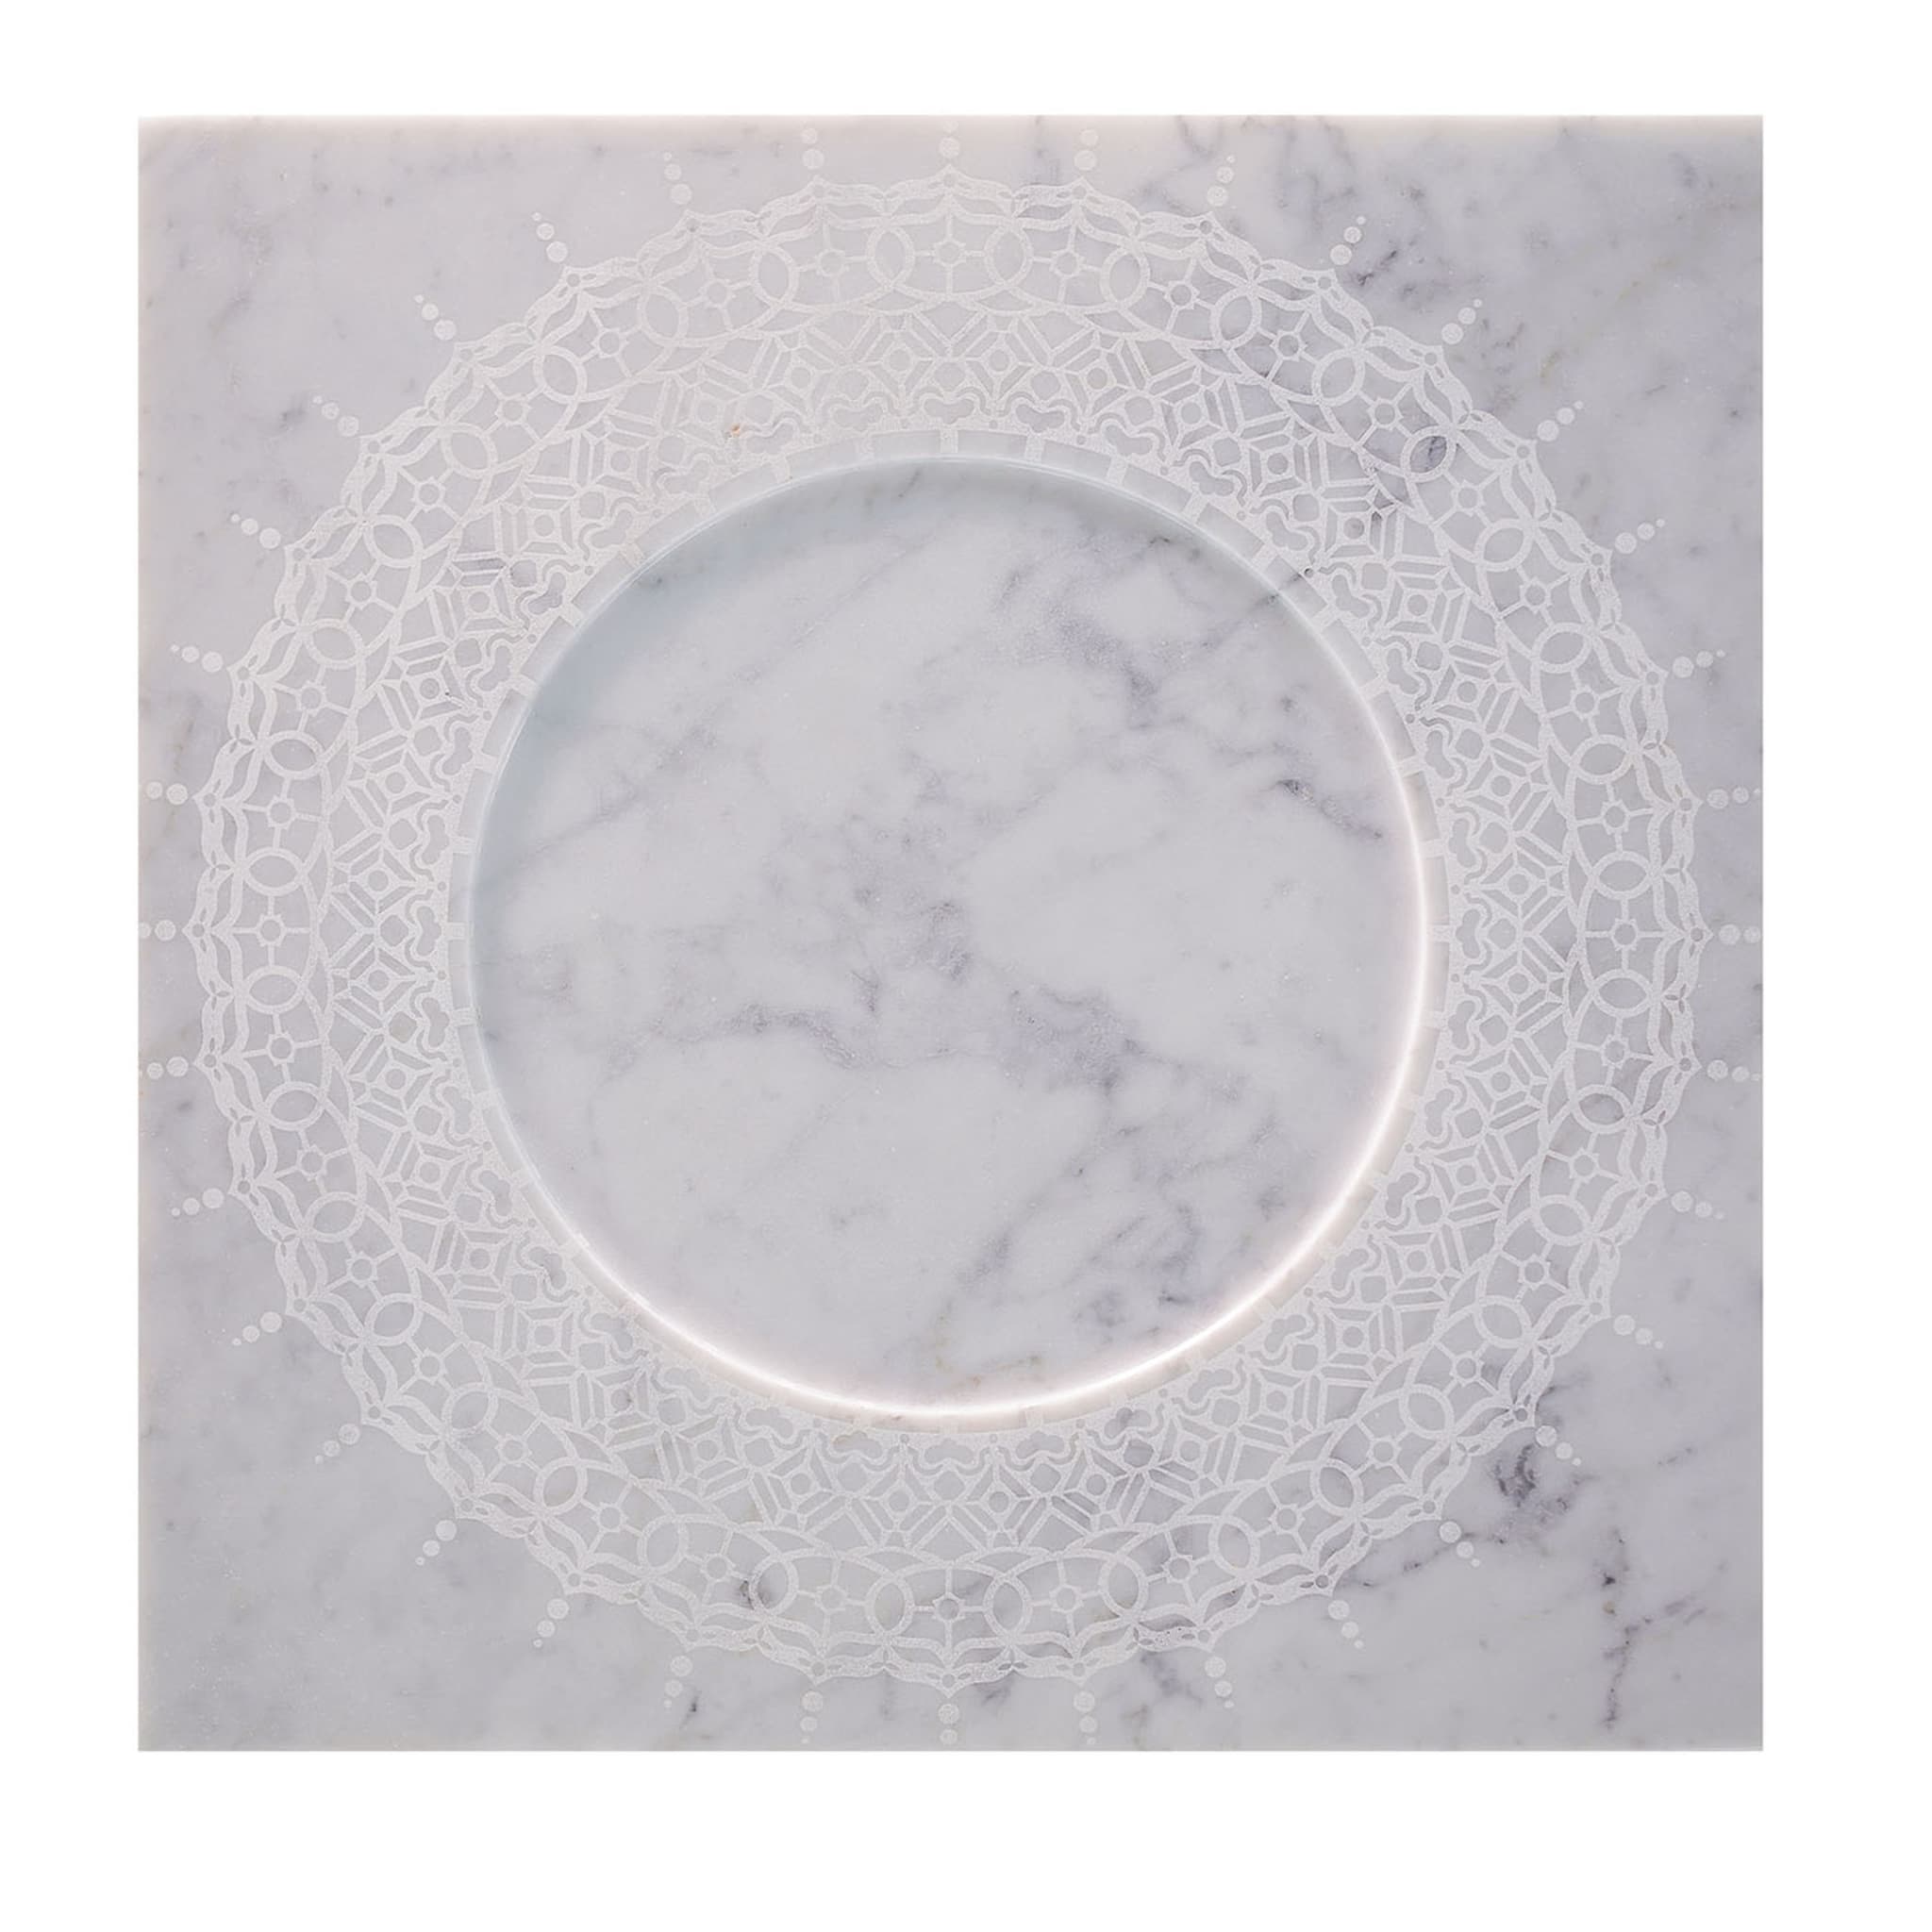 Venti20 Teller Q aus weißem Carrara-Marmor - Hauptansicht